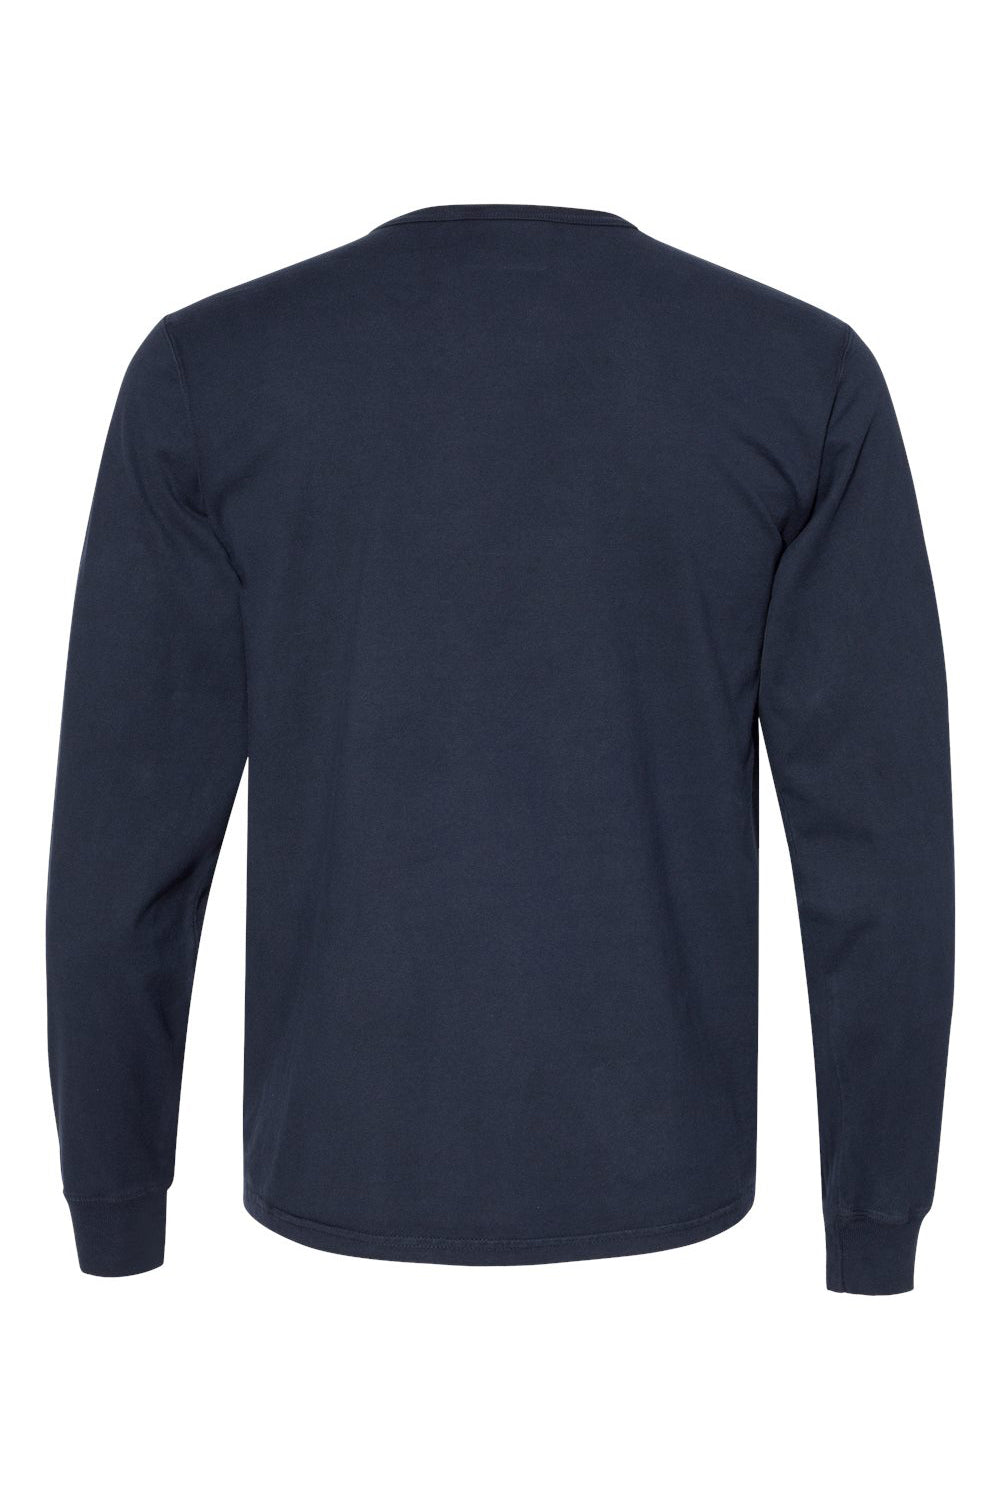 Champion CD200 Mens Garment Dyed Long Sleeve Crewneck T-Shirt Navy Blue Flat Back